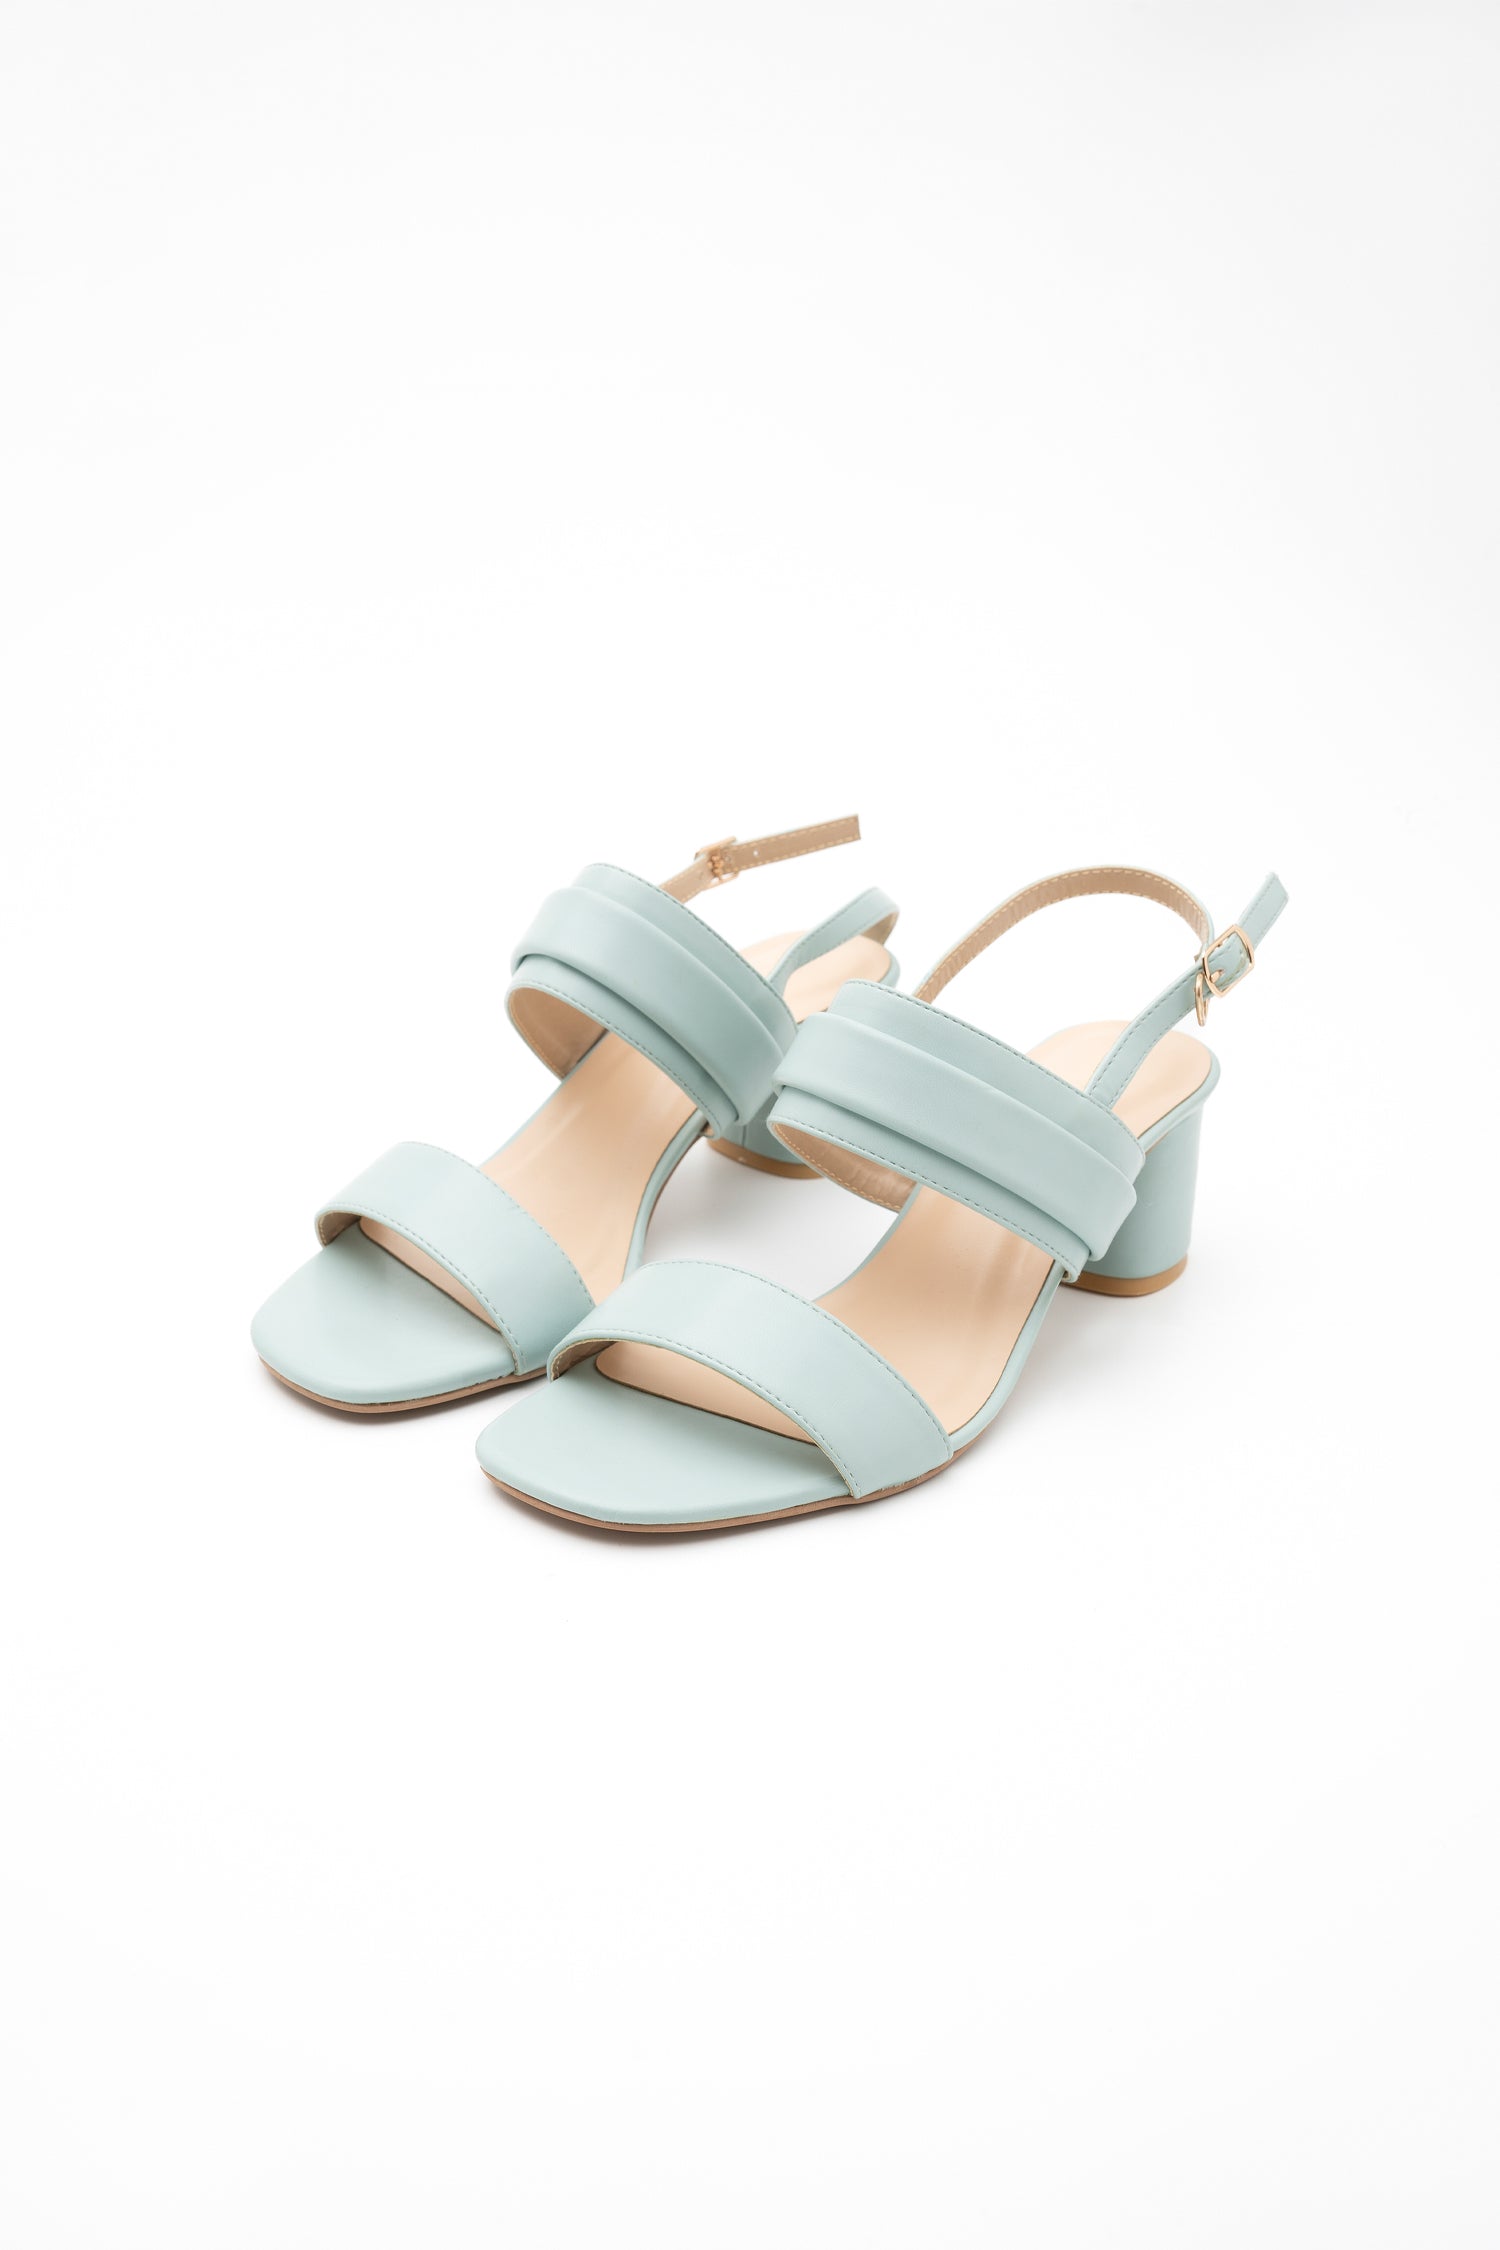 High heels sandals Shopping Online In Pakistan